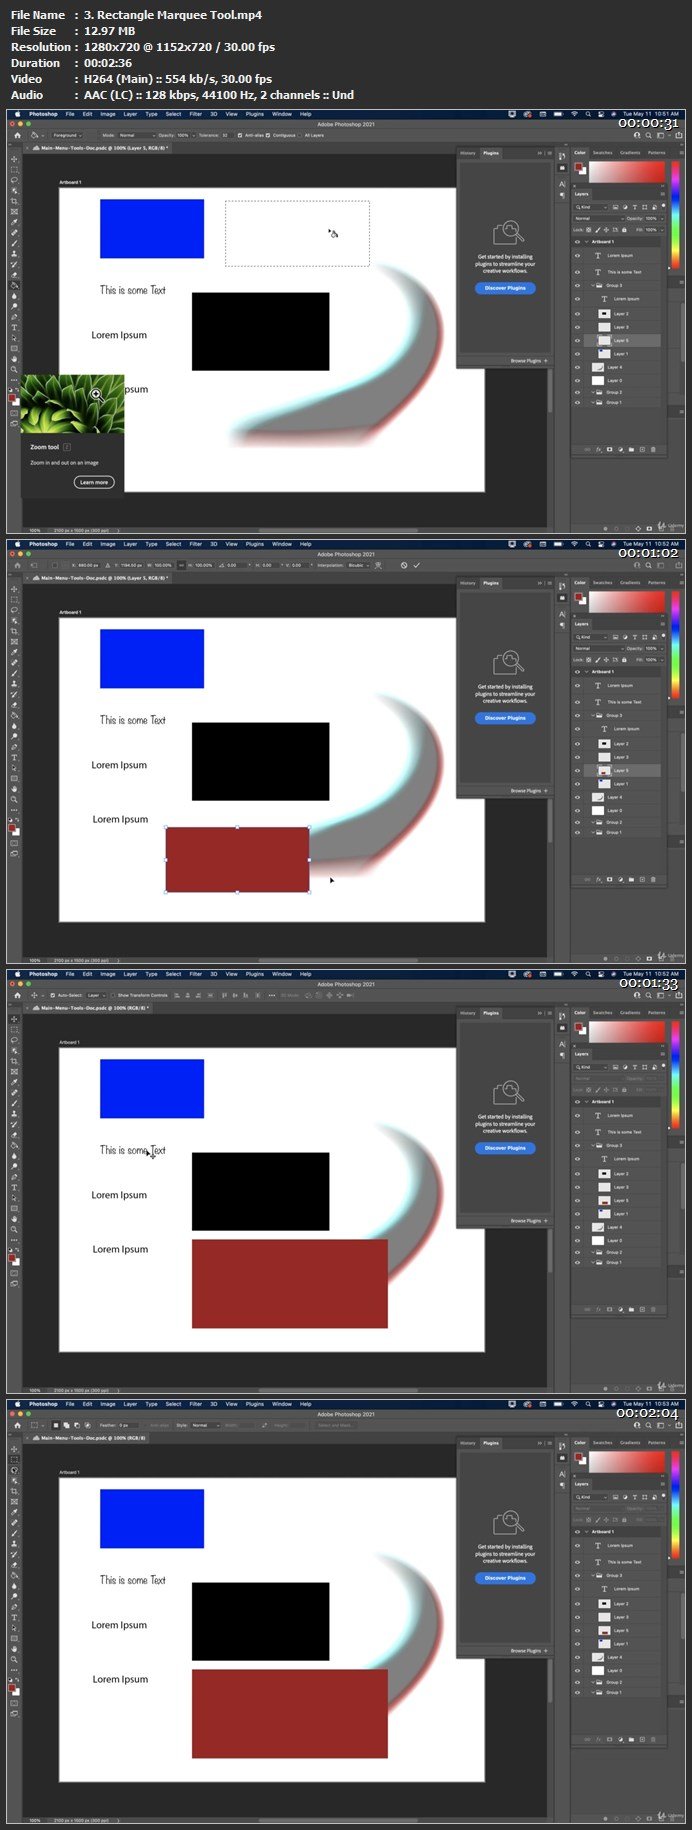 Adobe Photoshop 2021 - Photo Editing